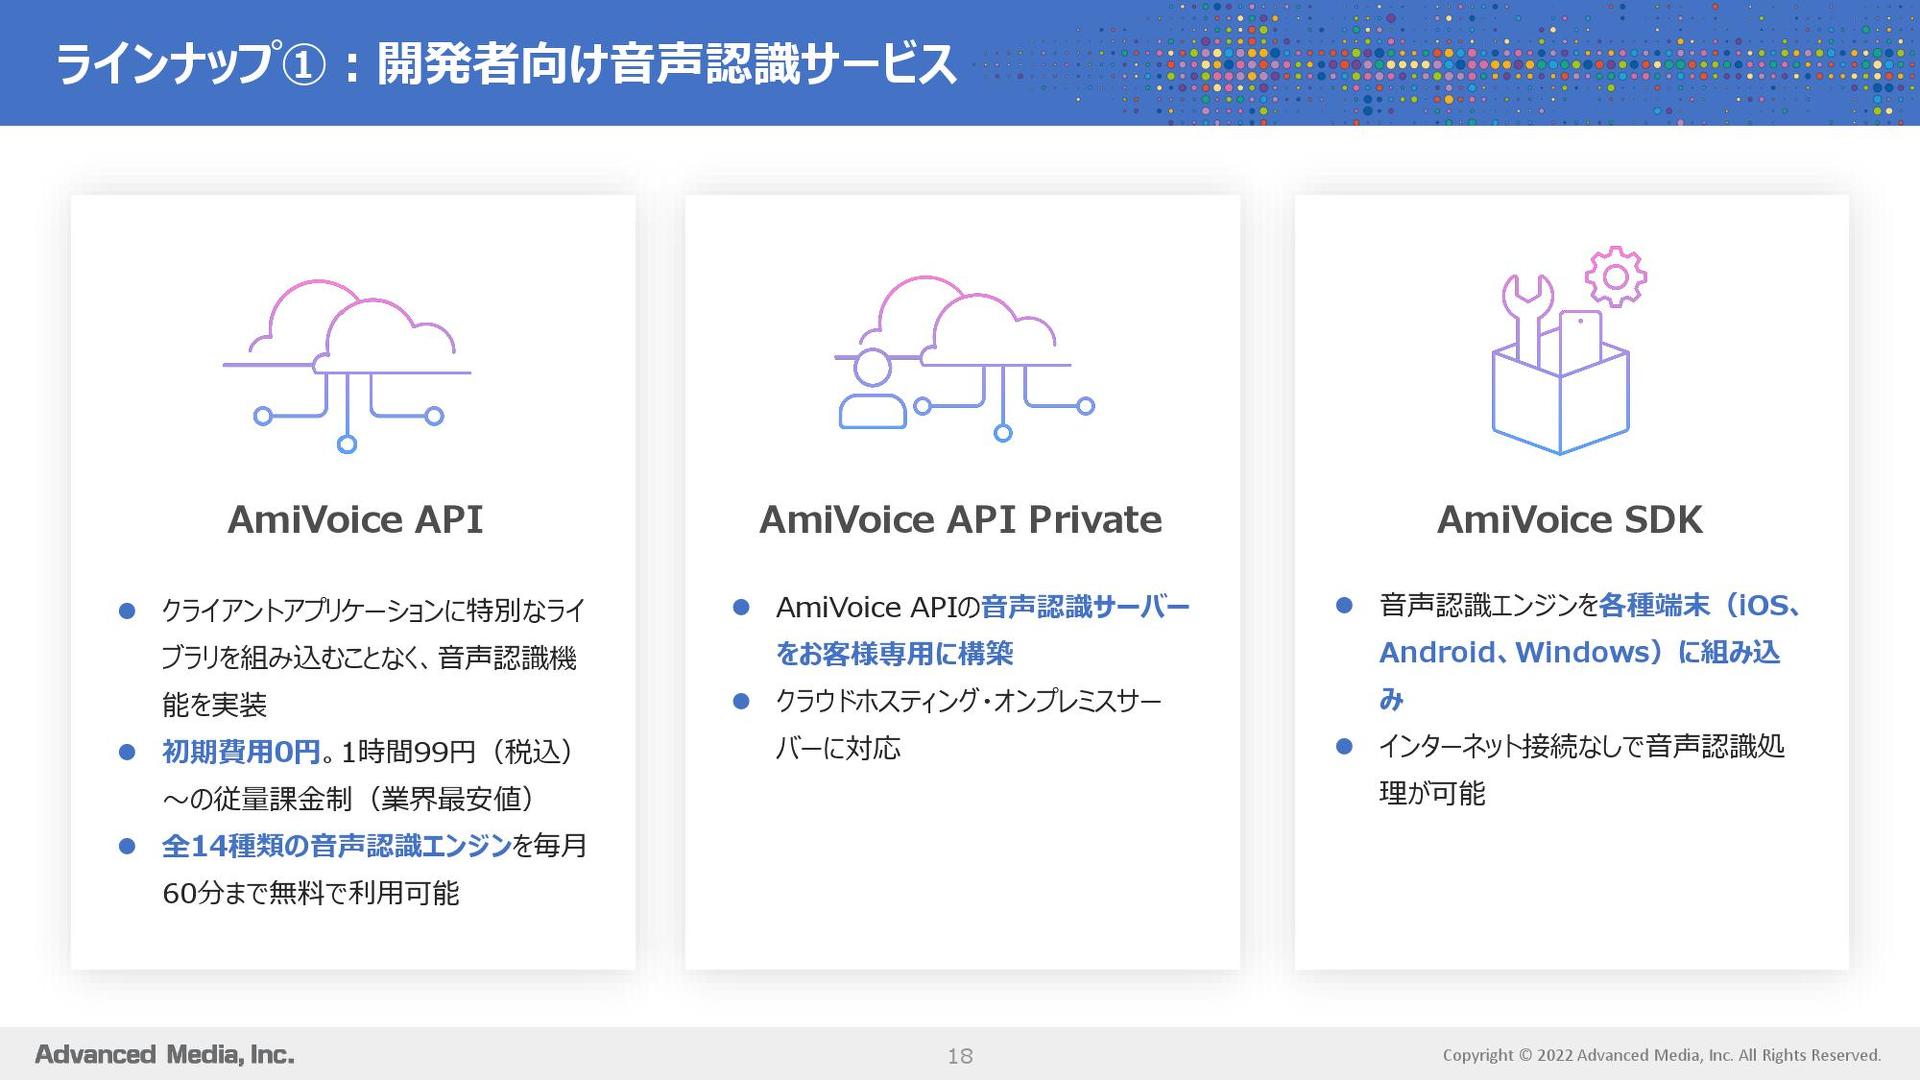 AmiVoice Cloud Platform̎Ȓ񋟕mNbNĊgn oFAhoXgEfBA